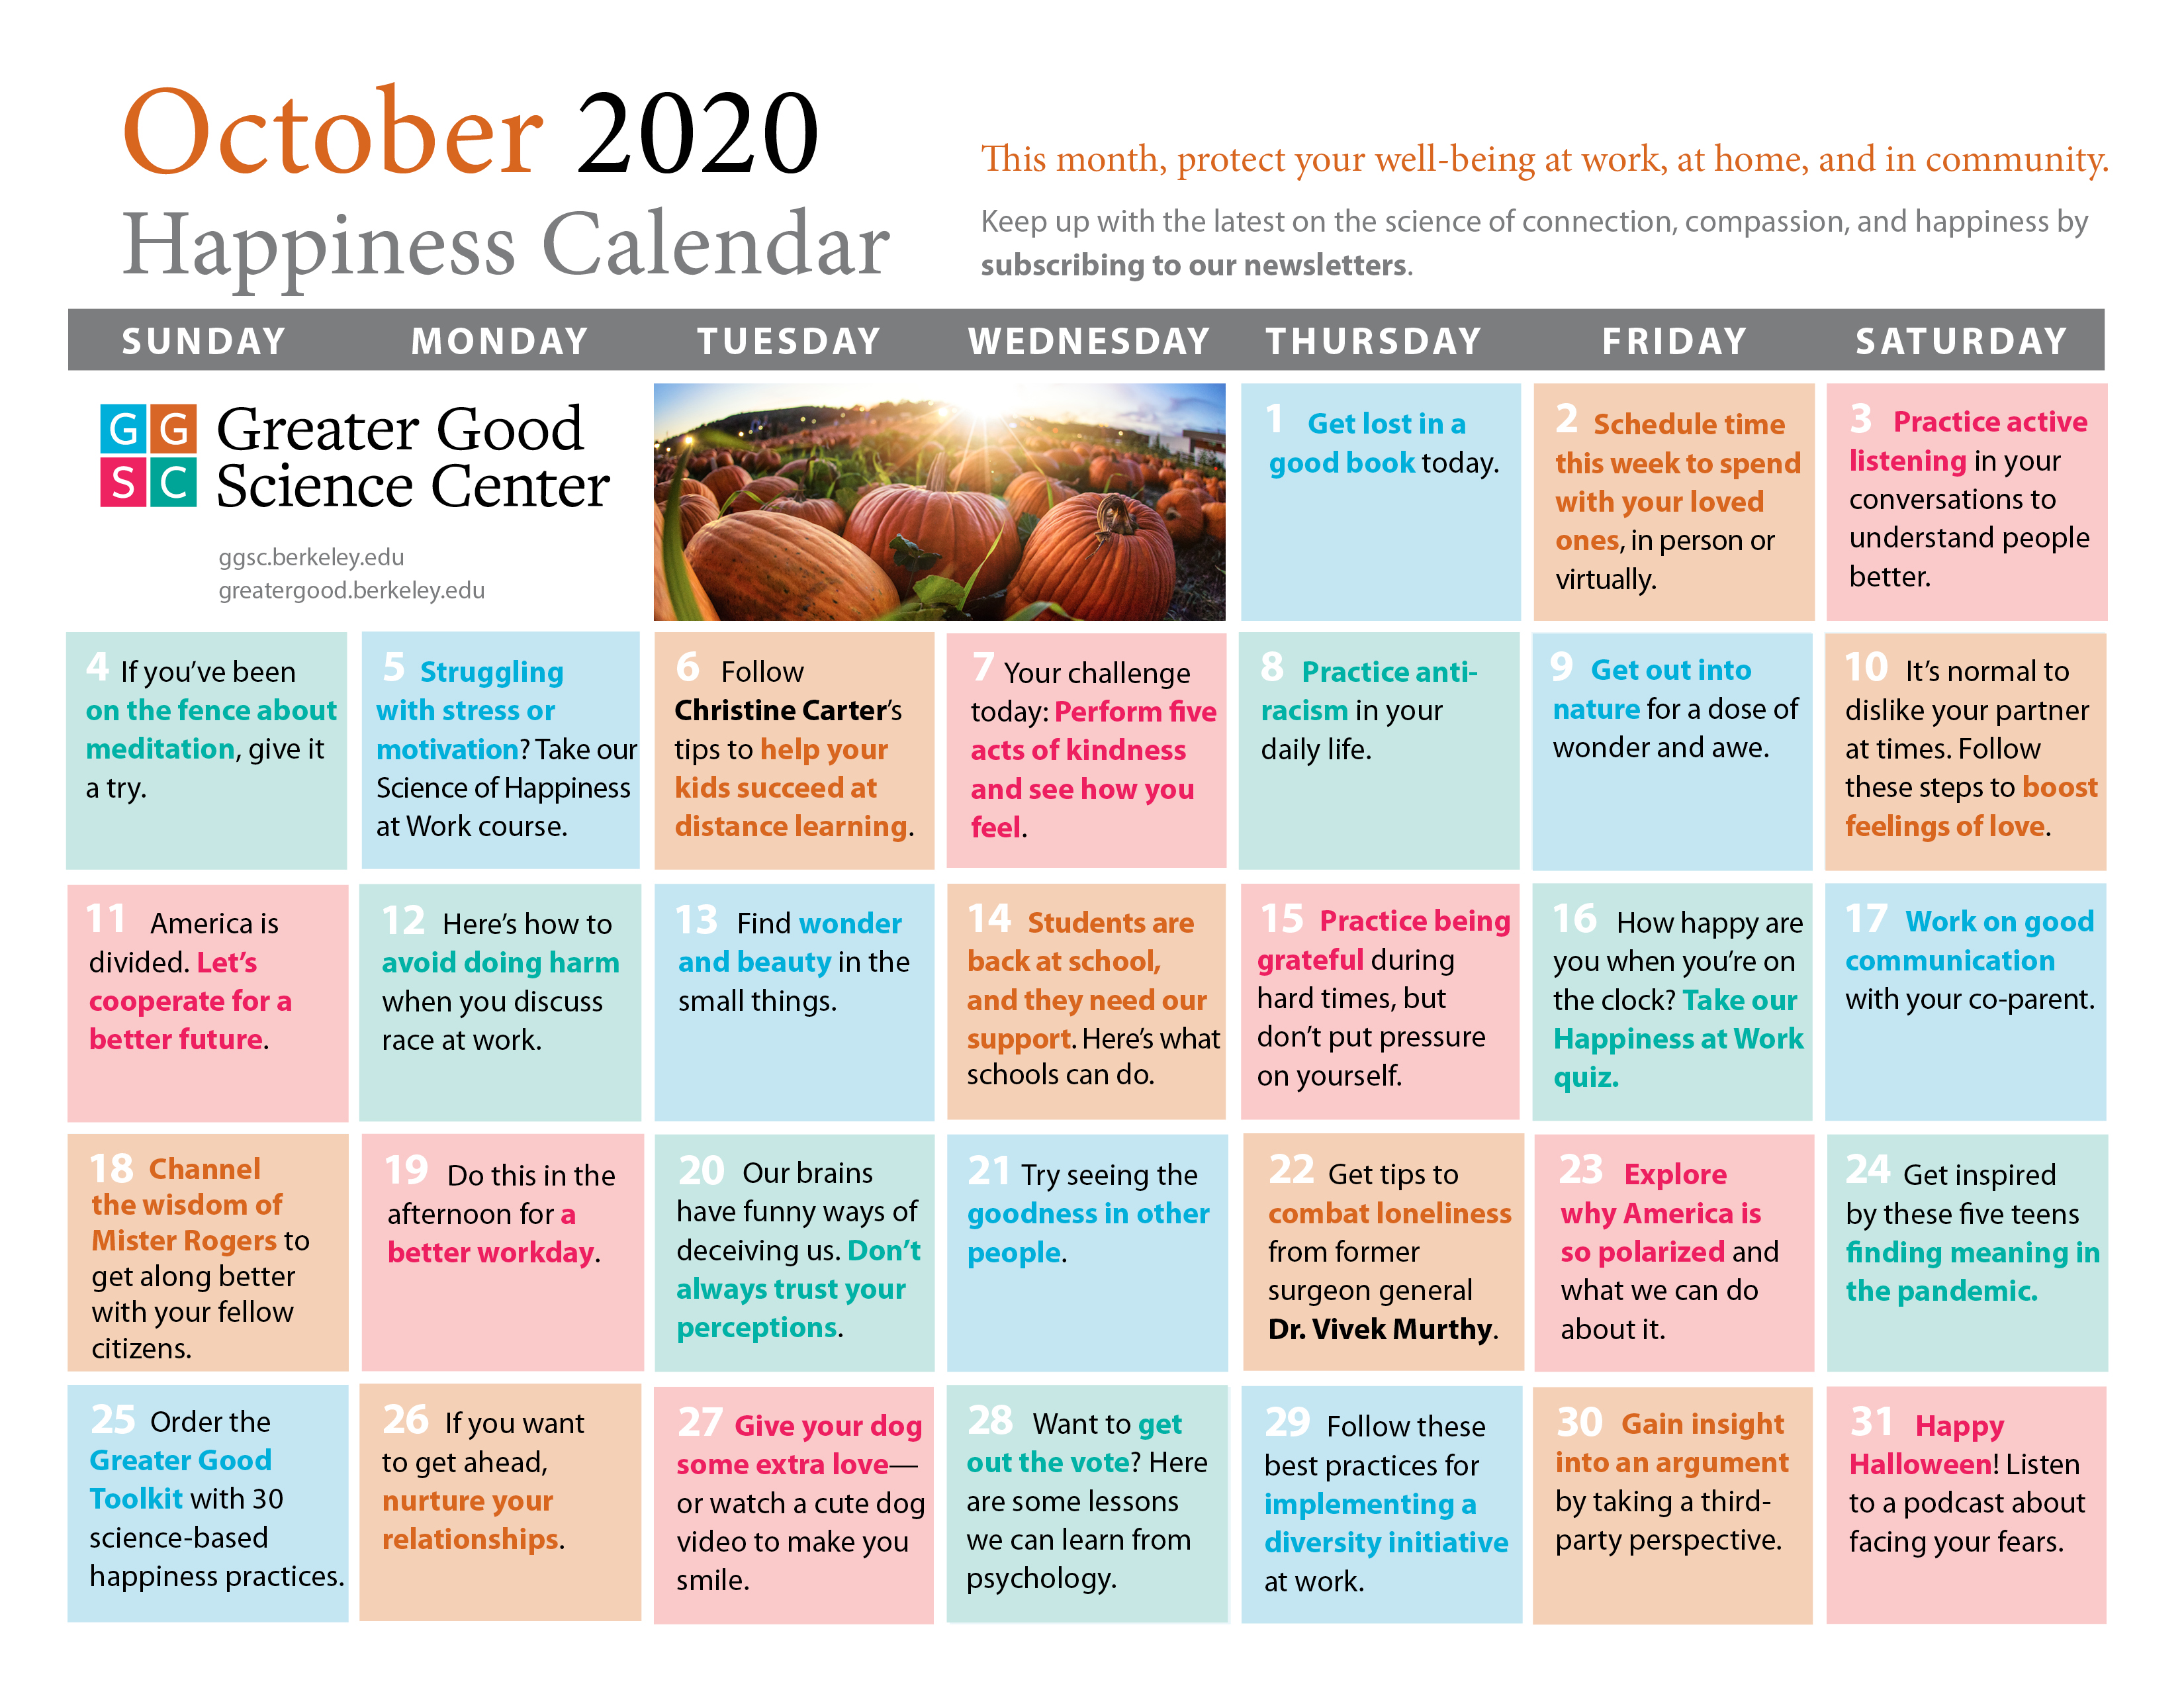 october happiness calendar